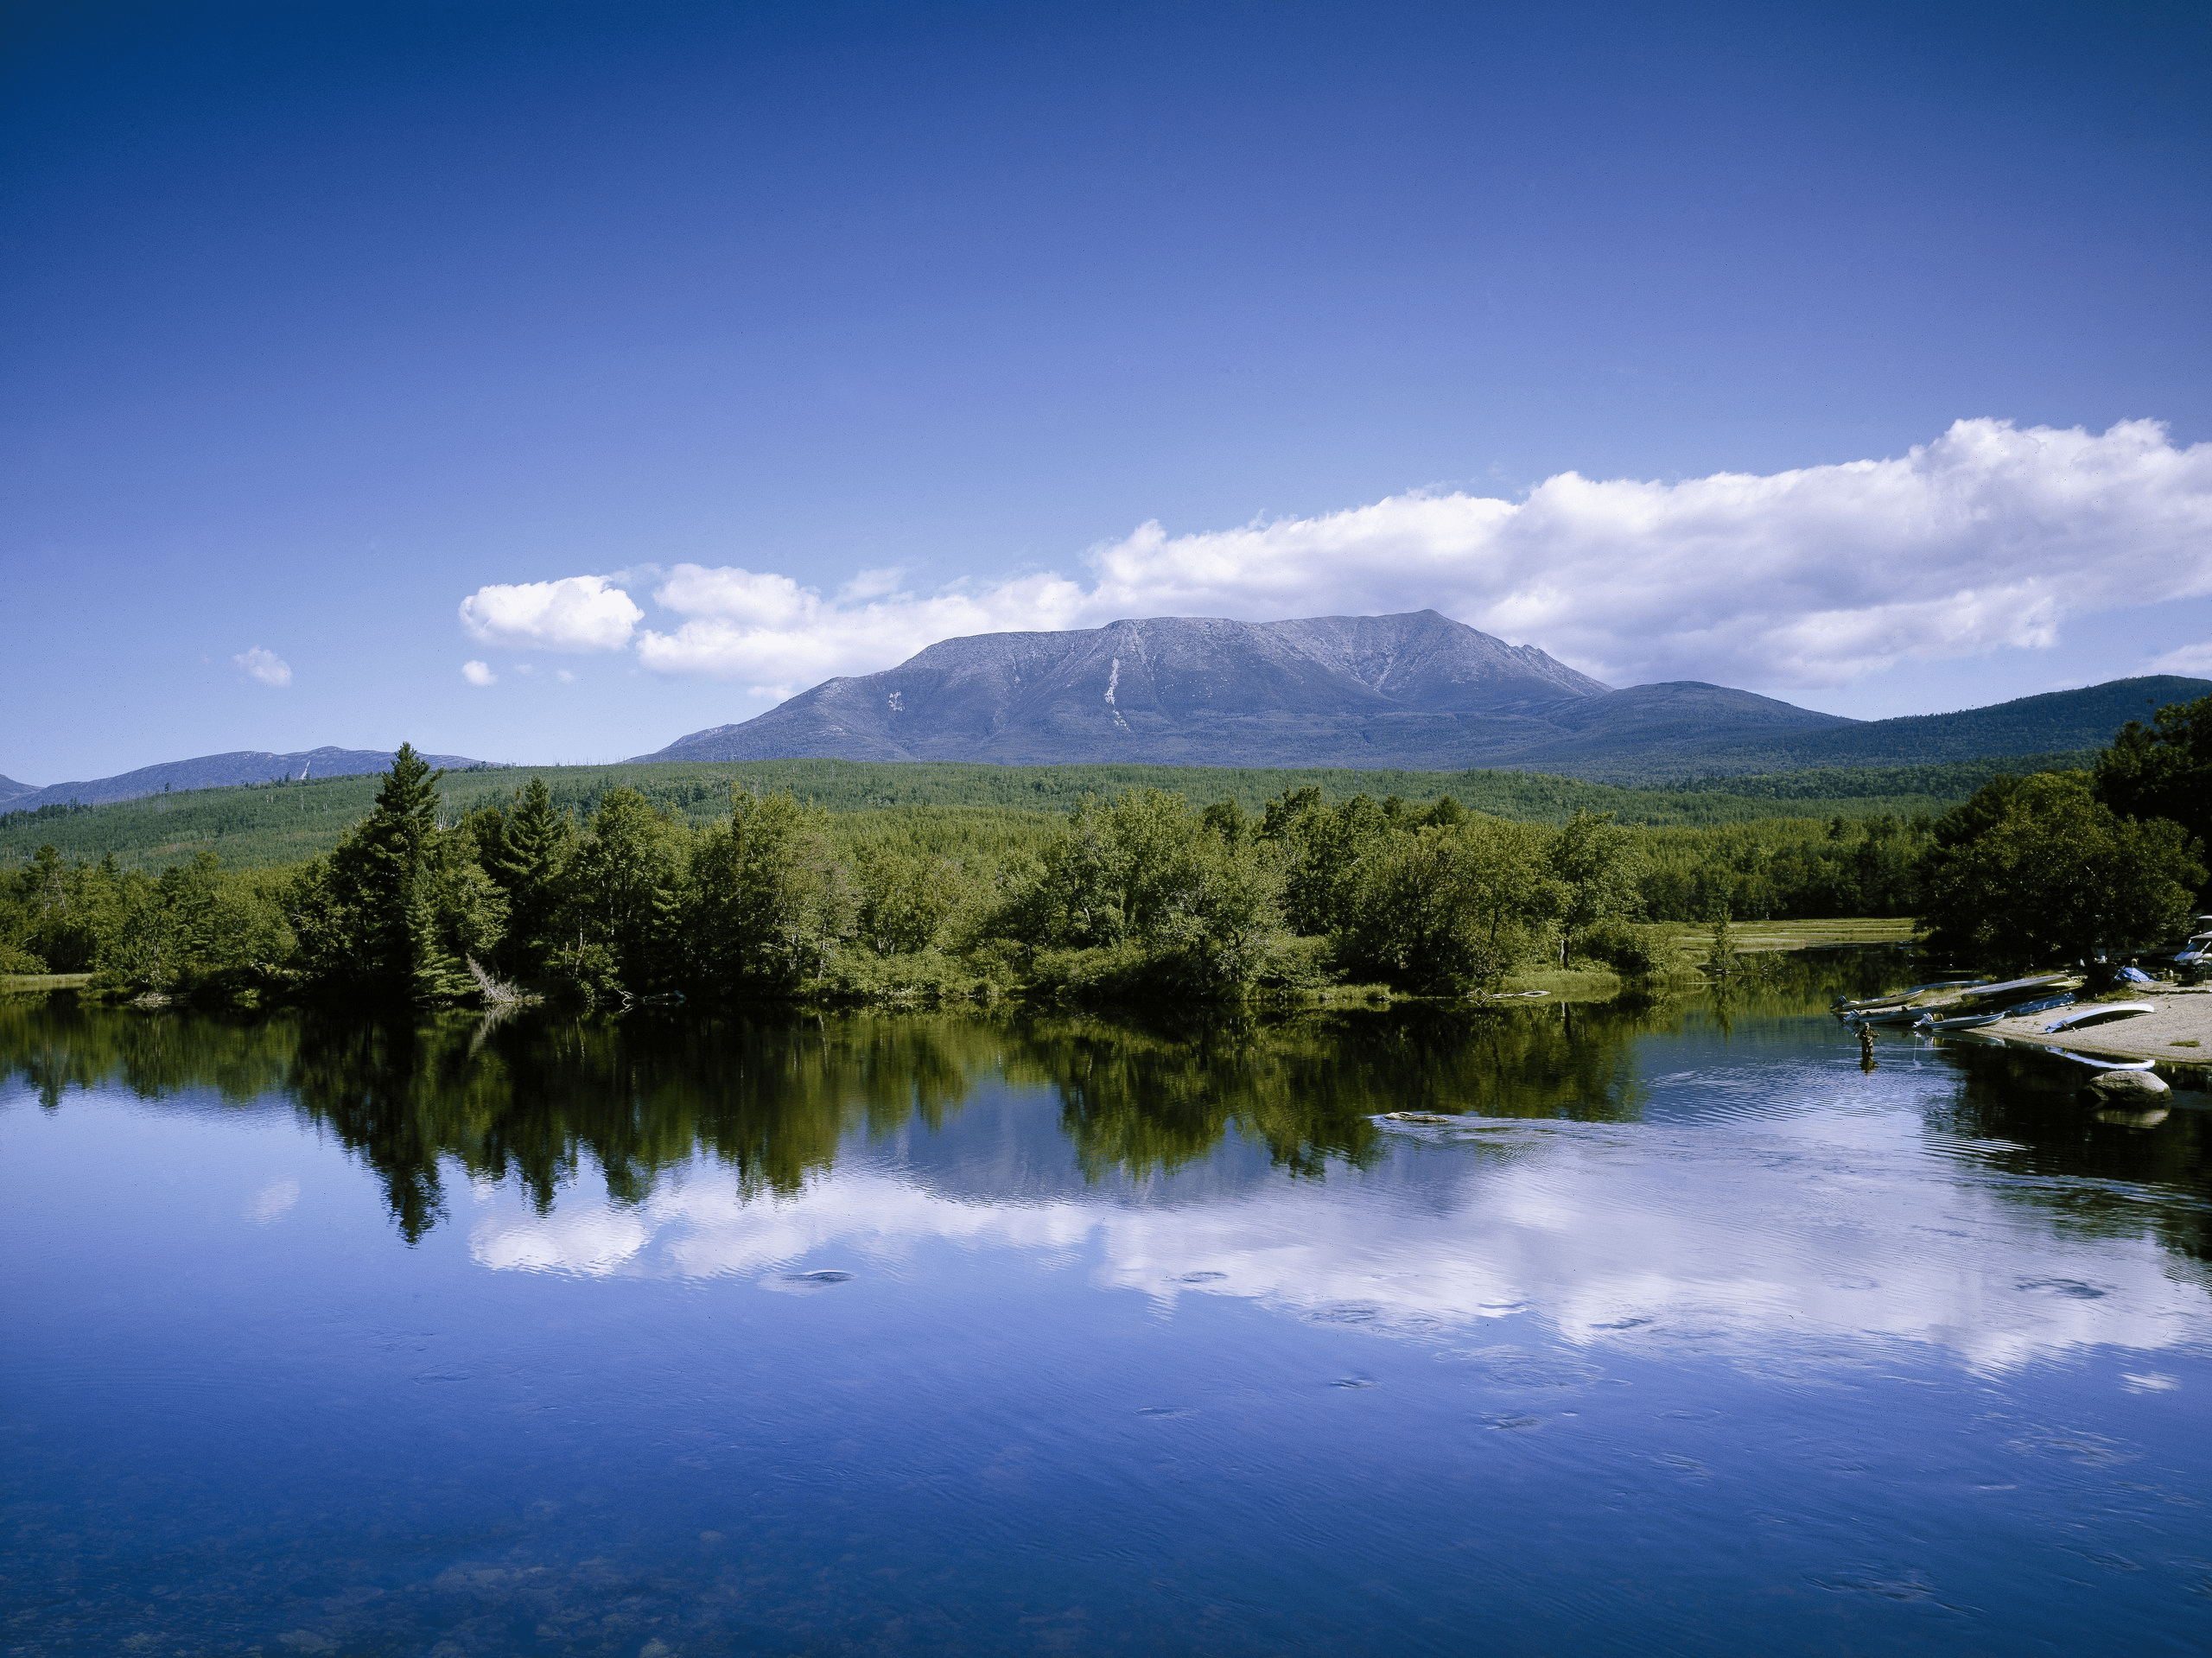 Appalachian Trail and view of Mount Katahdin